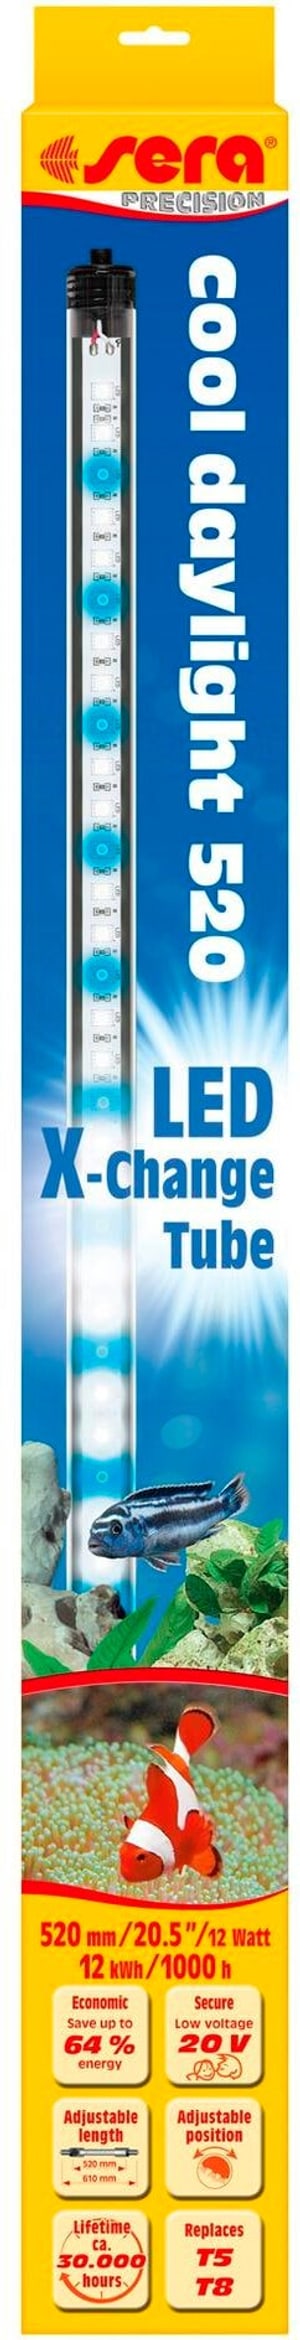 Ampoule LED X-Change Tube CD, 520 mm